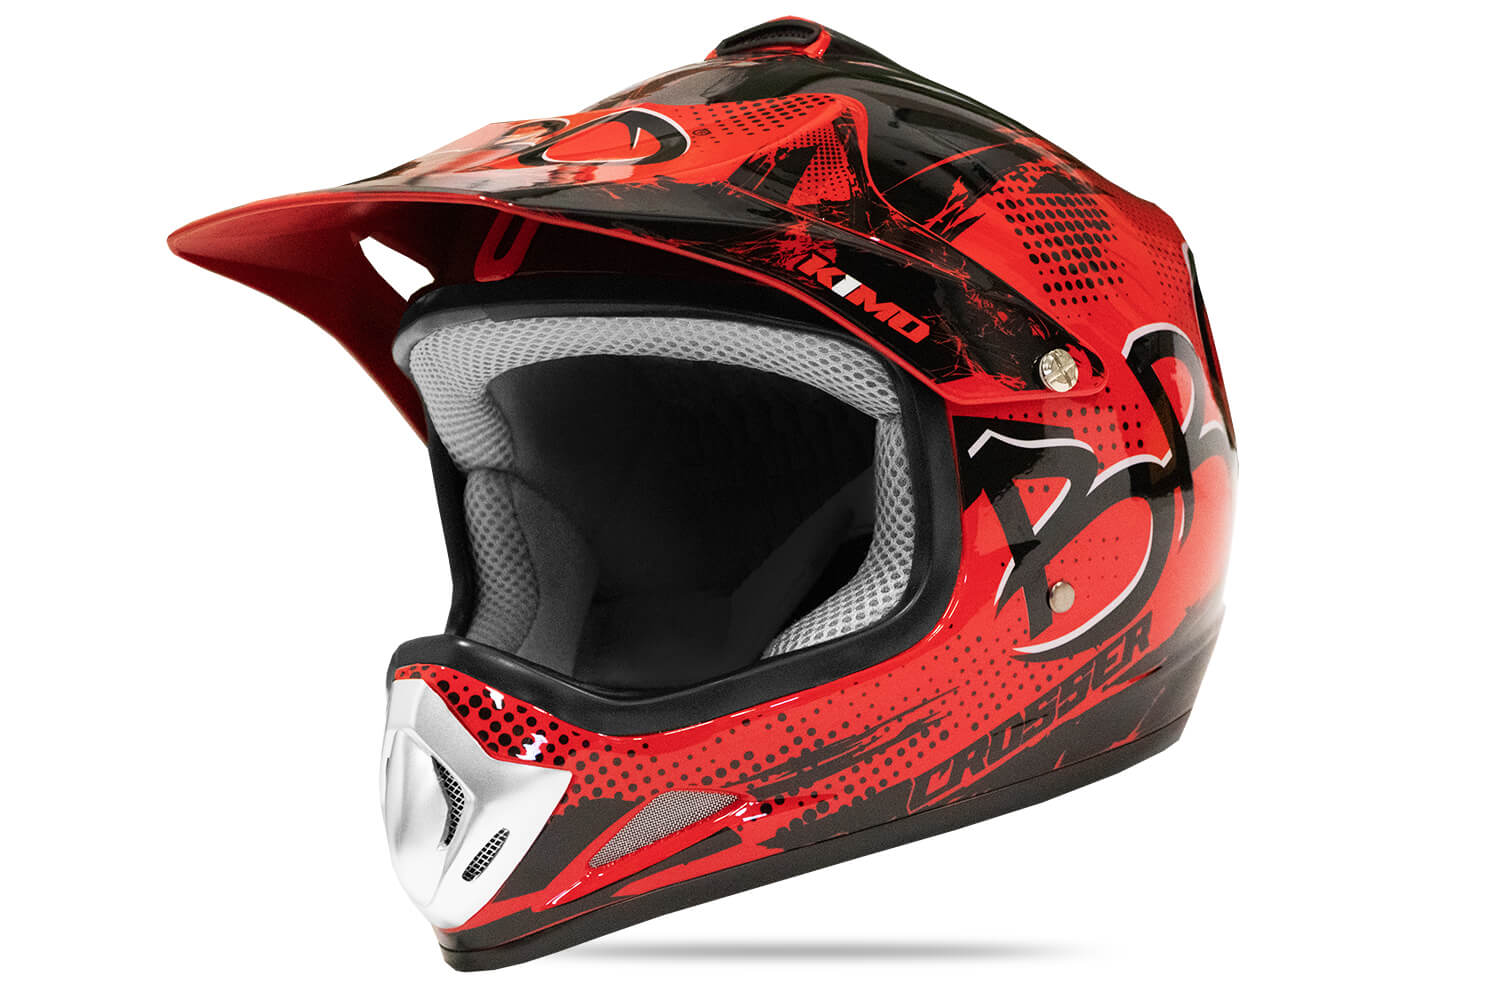 https://minibikes.store/image/catalog/produkty2/kimobro/Bro-motocross-helmet-for-children-and-teenagers-red%20(1).jpg